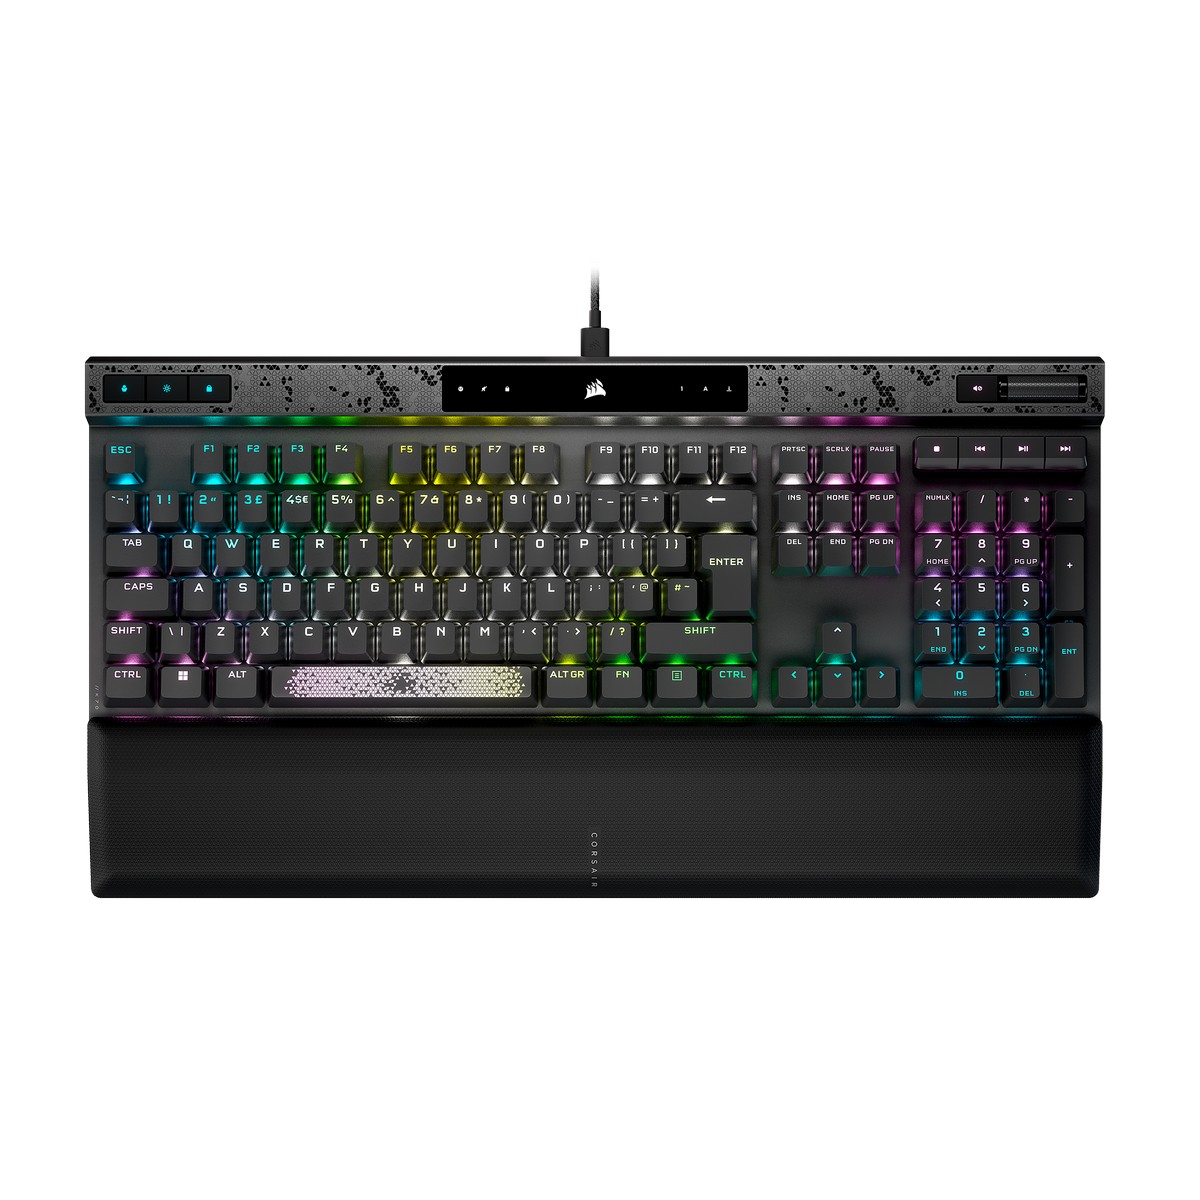 CORSAIR - Corsair K70 RGB PRO MAX Mechanical Gaming Keyboard